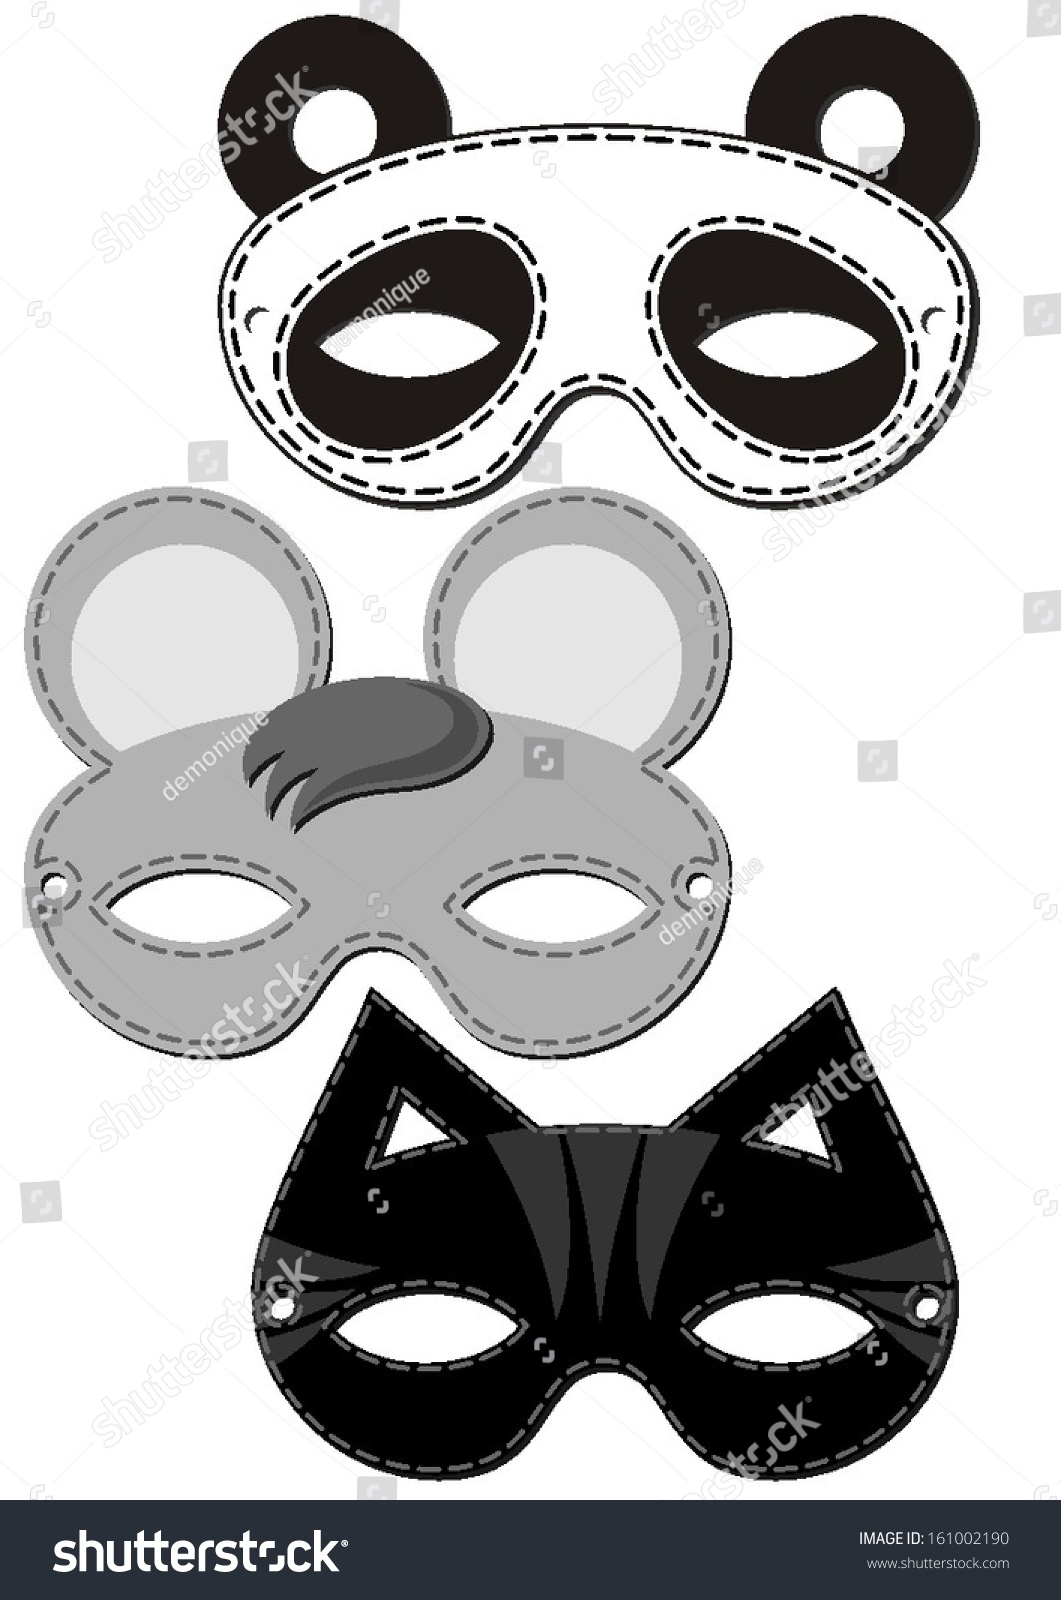 Mouse Cat Panda Bear Mask Animal Stock Vector Royalty Free 161002190